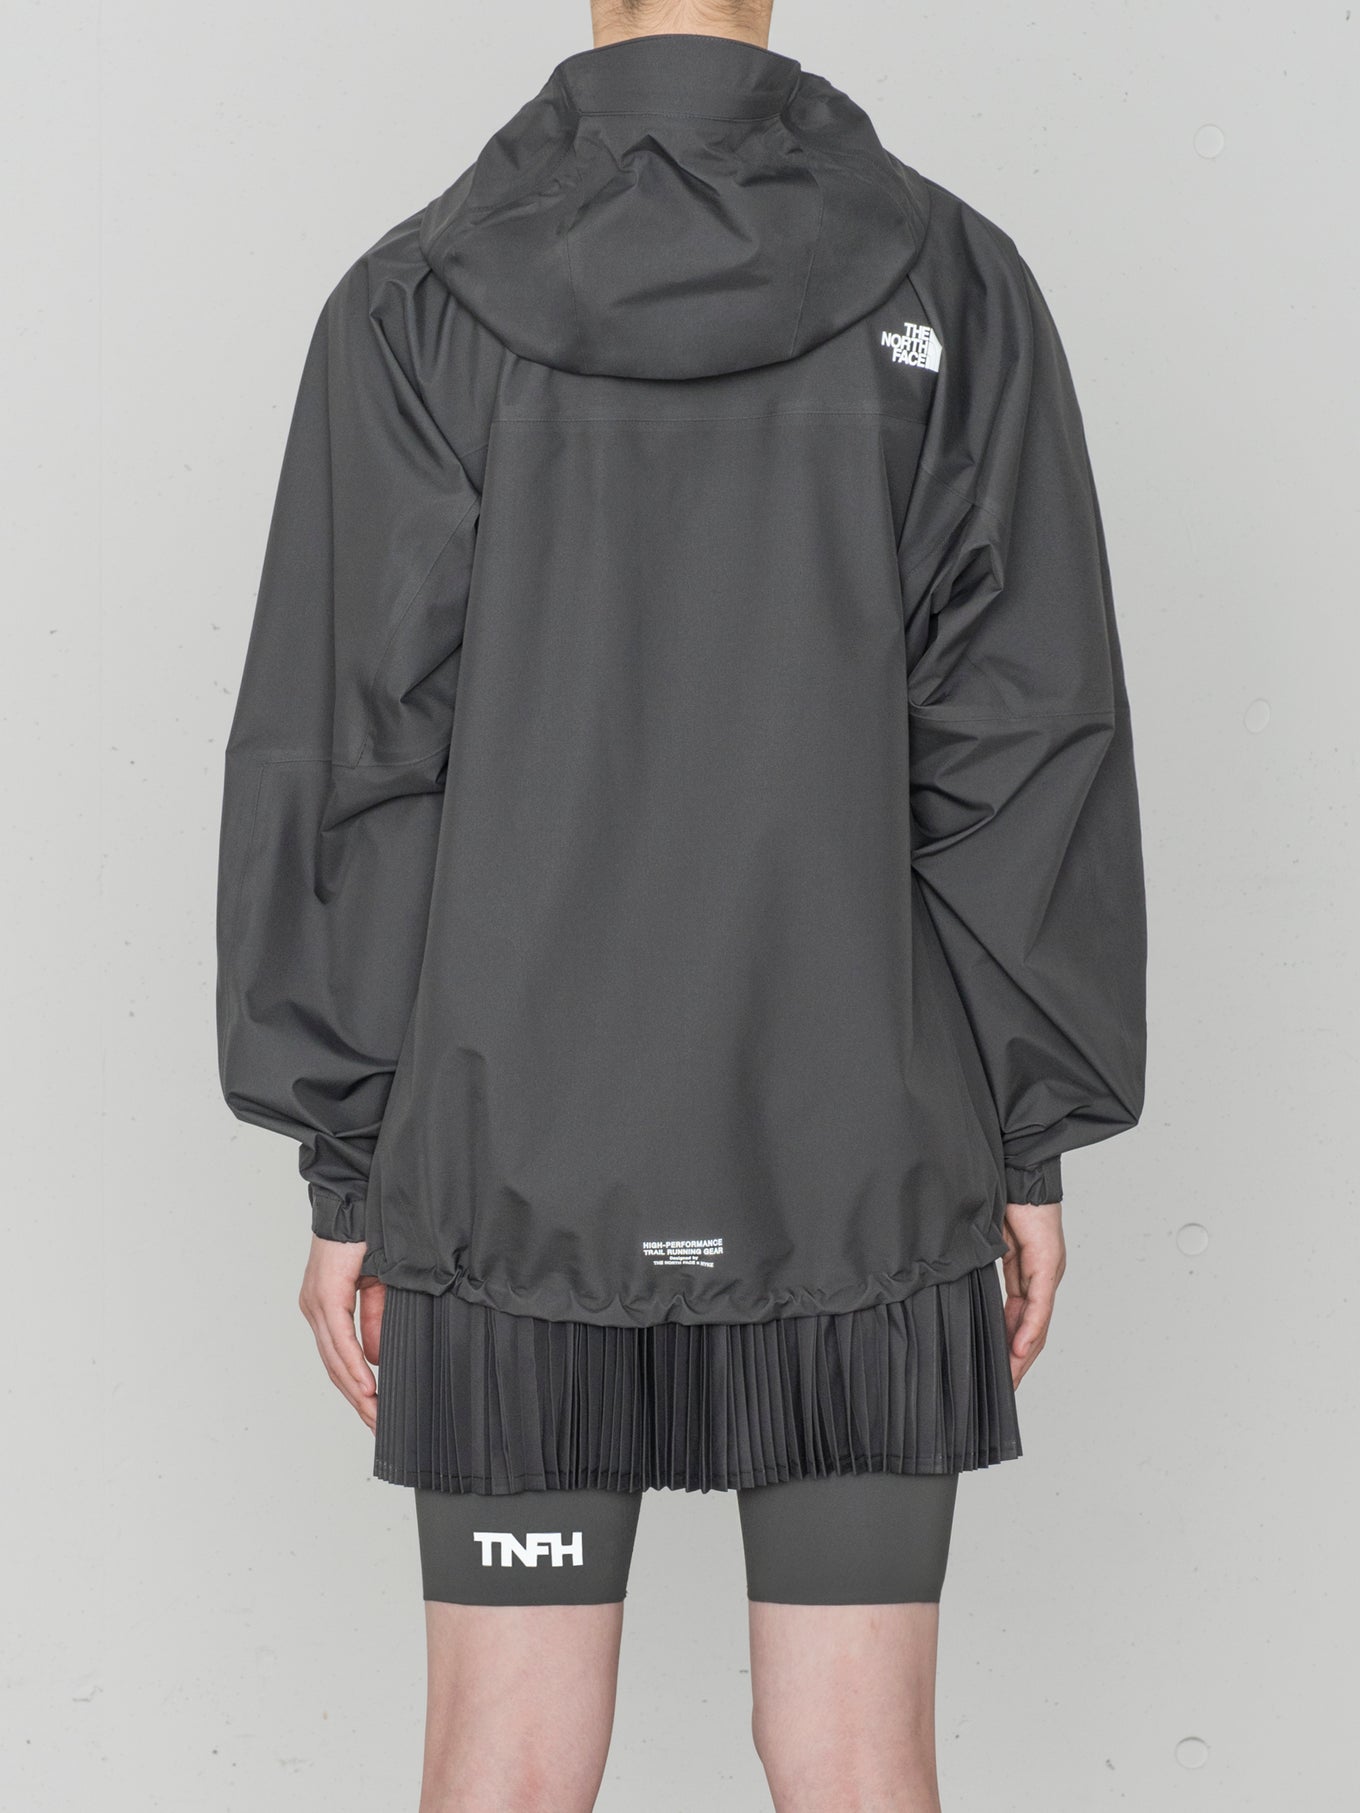 GTX Trail Jacket (Womens)<br>TNFH  THE NORTH FACE × HYKE